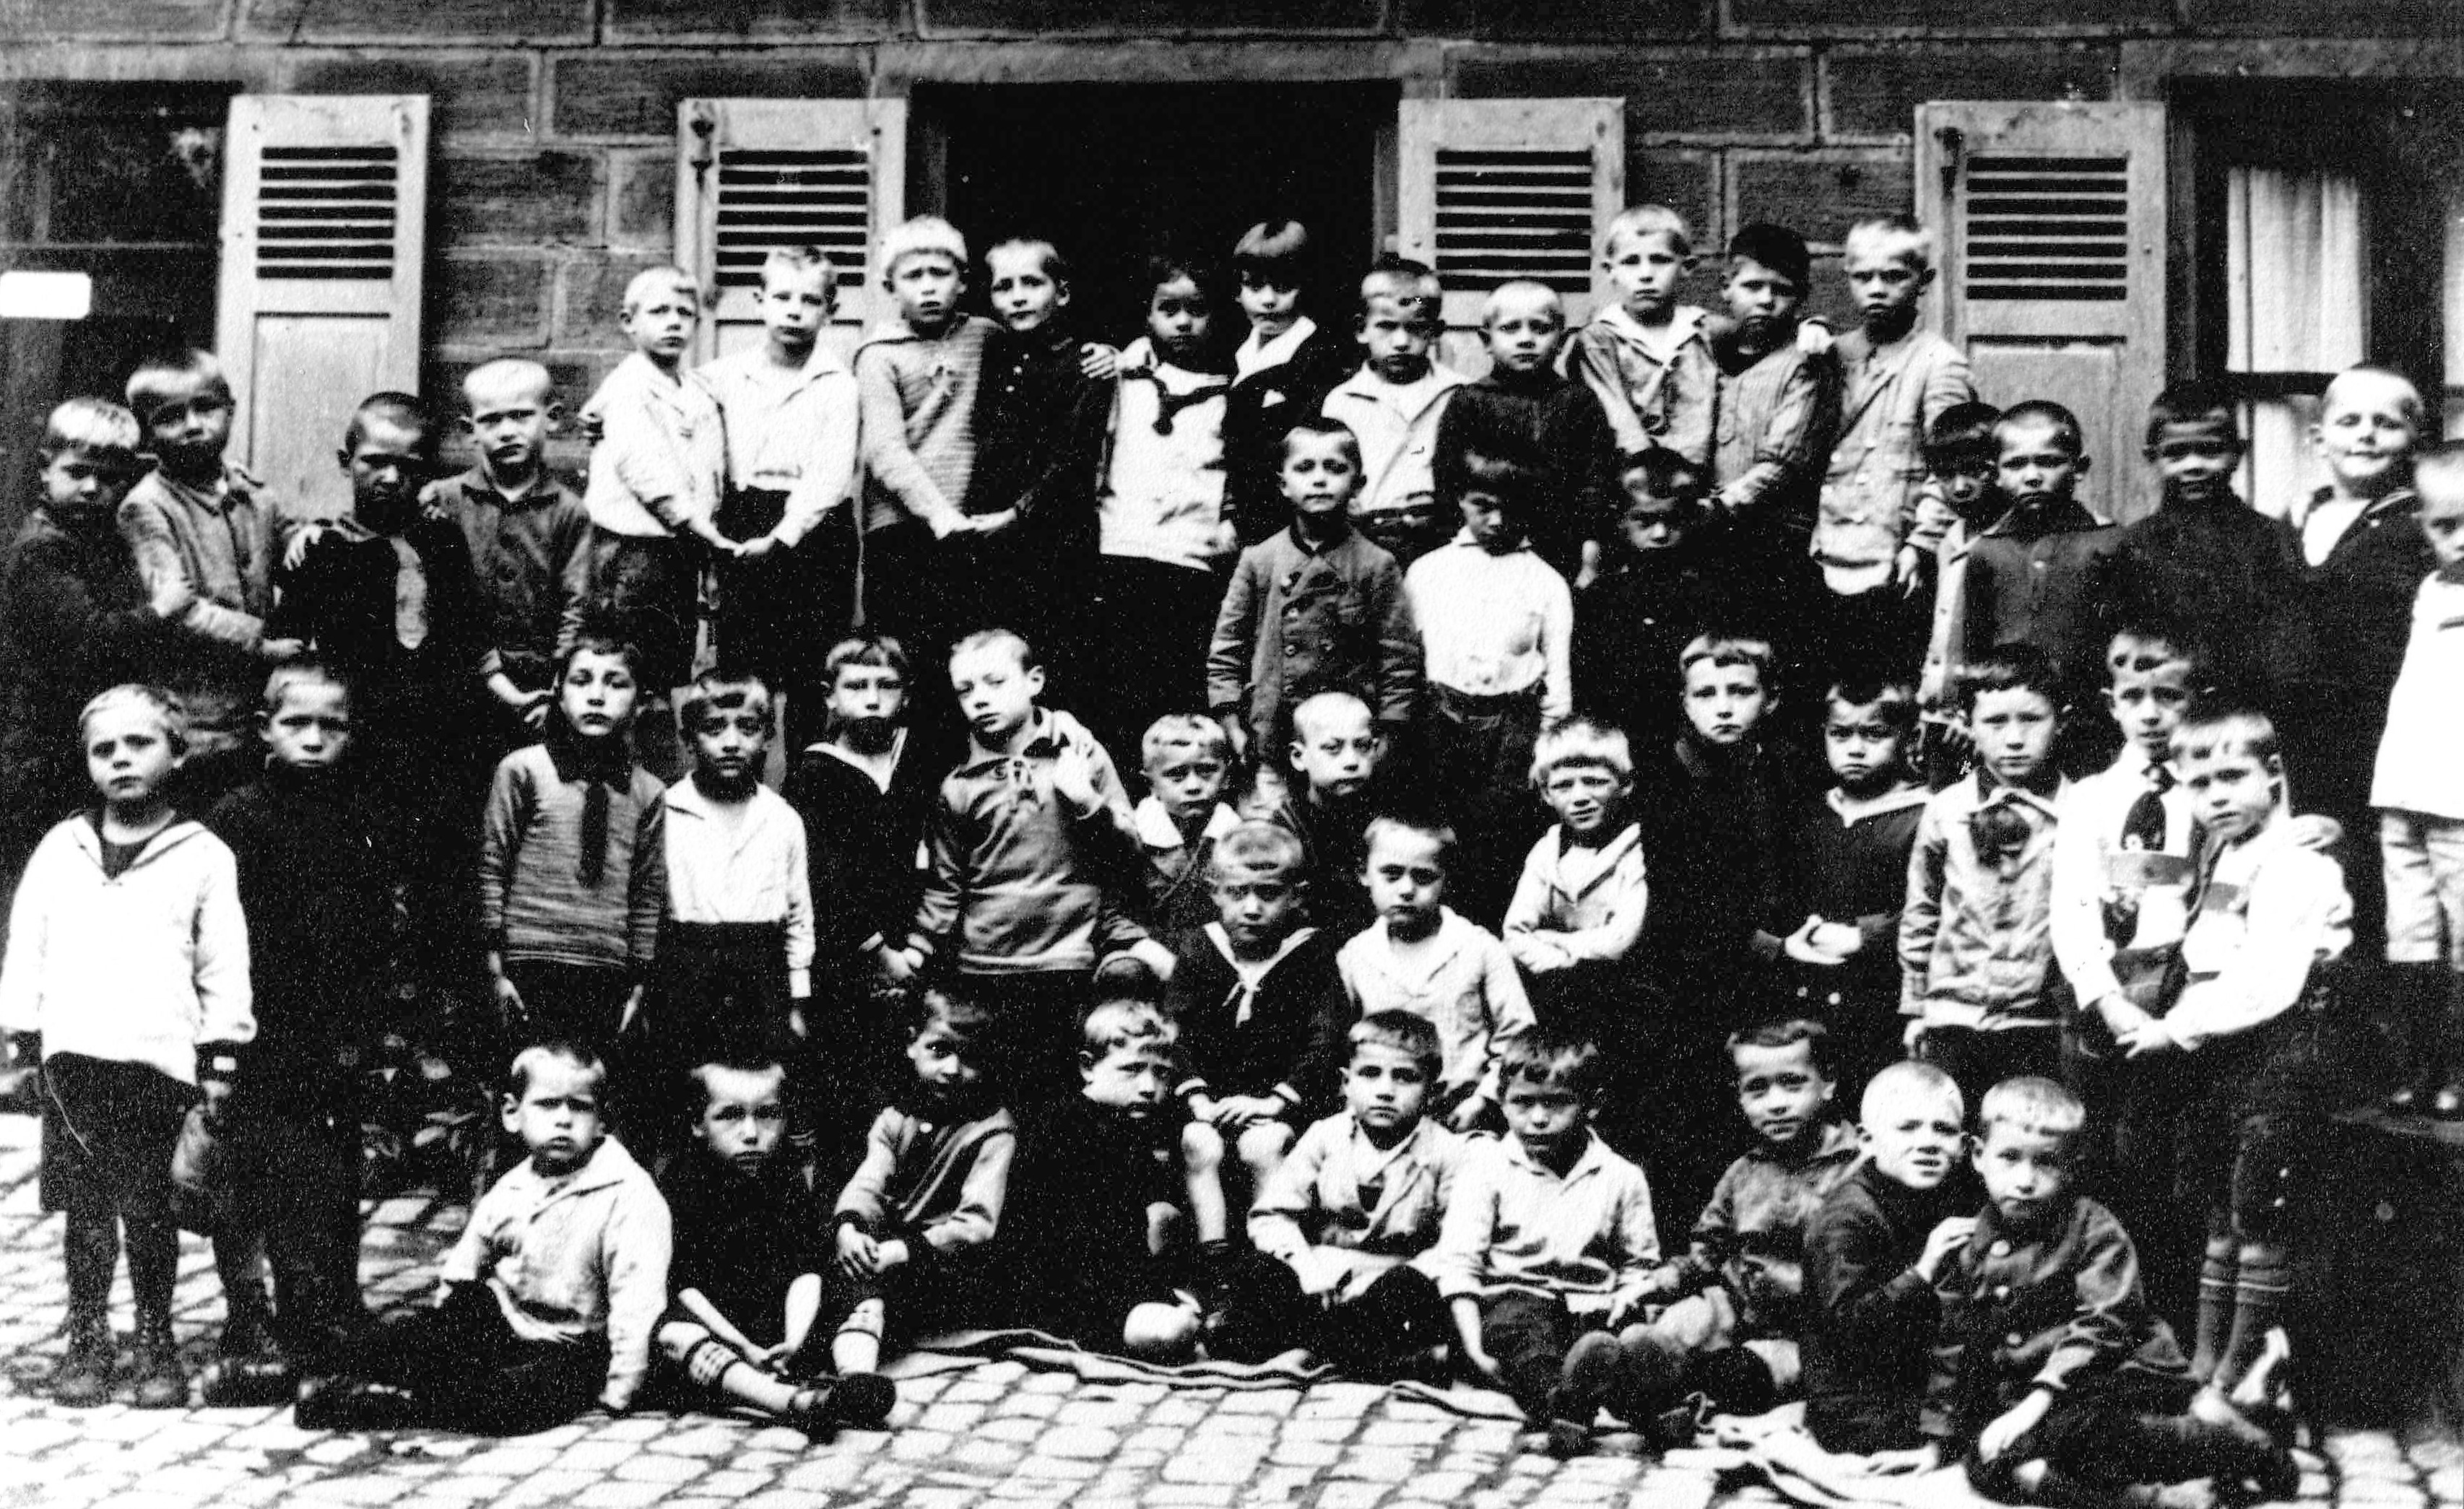 Foto-Sammlung Adolf Krapp, Ordner 9: Volksschule, 1928 (Museumsgesellschaft Bad Dürkheim e.V. CC BY-NC-SA)